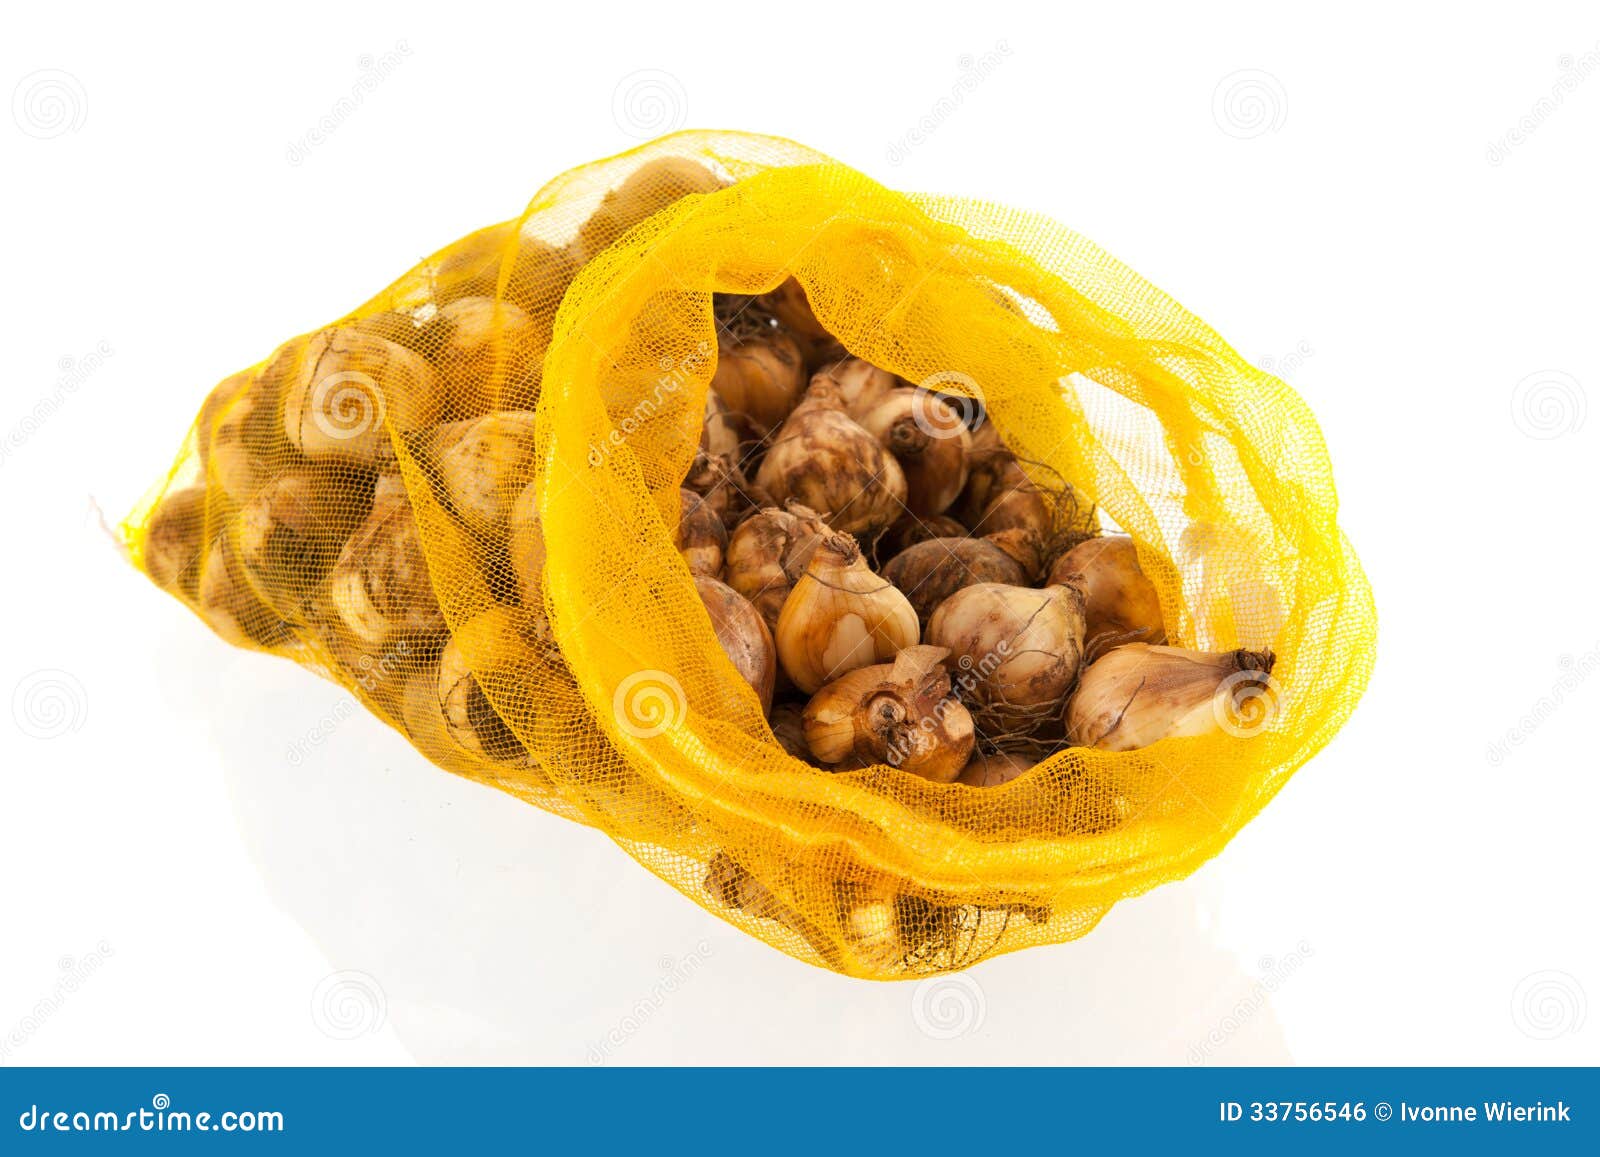 flower bulbs in bag